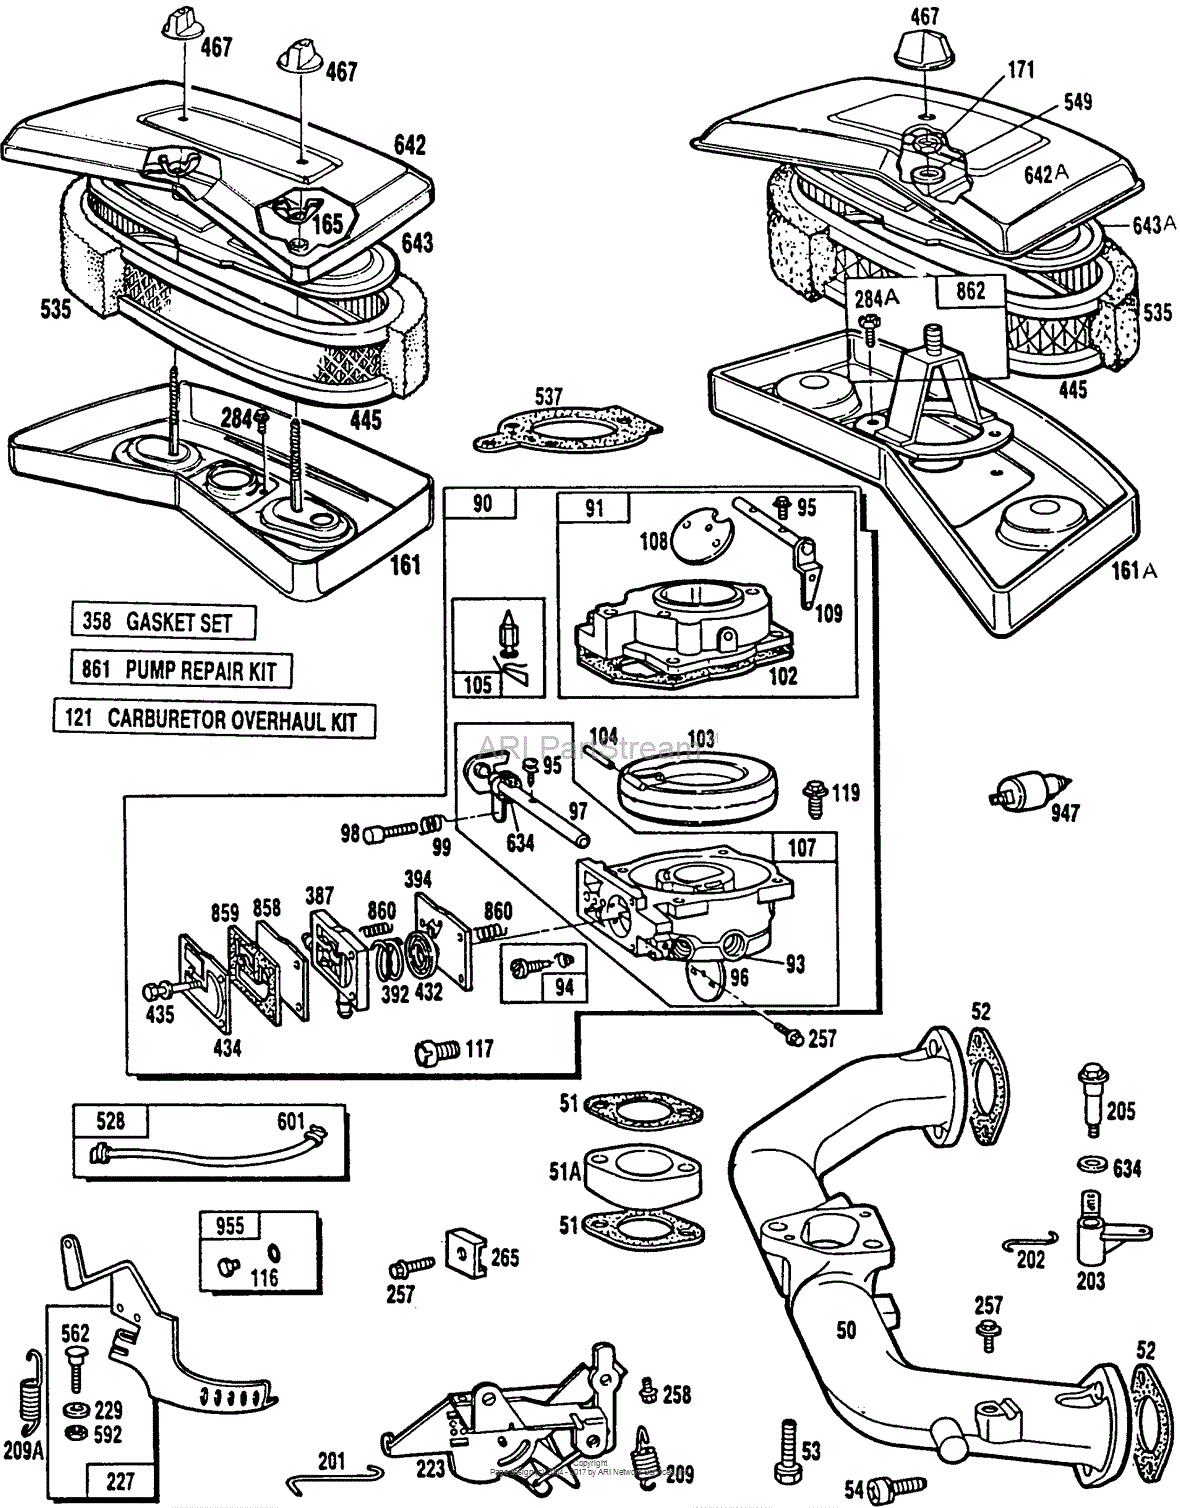 Briggs And Stratton Carburetor Linkage Diagram 1